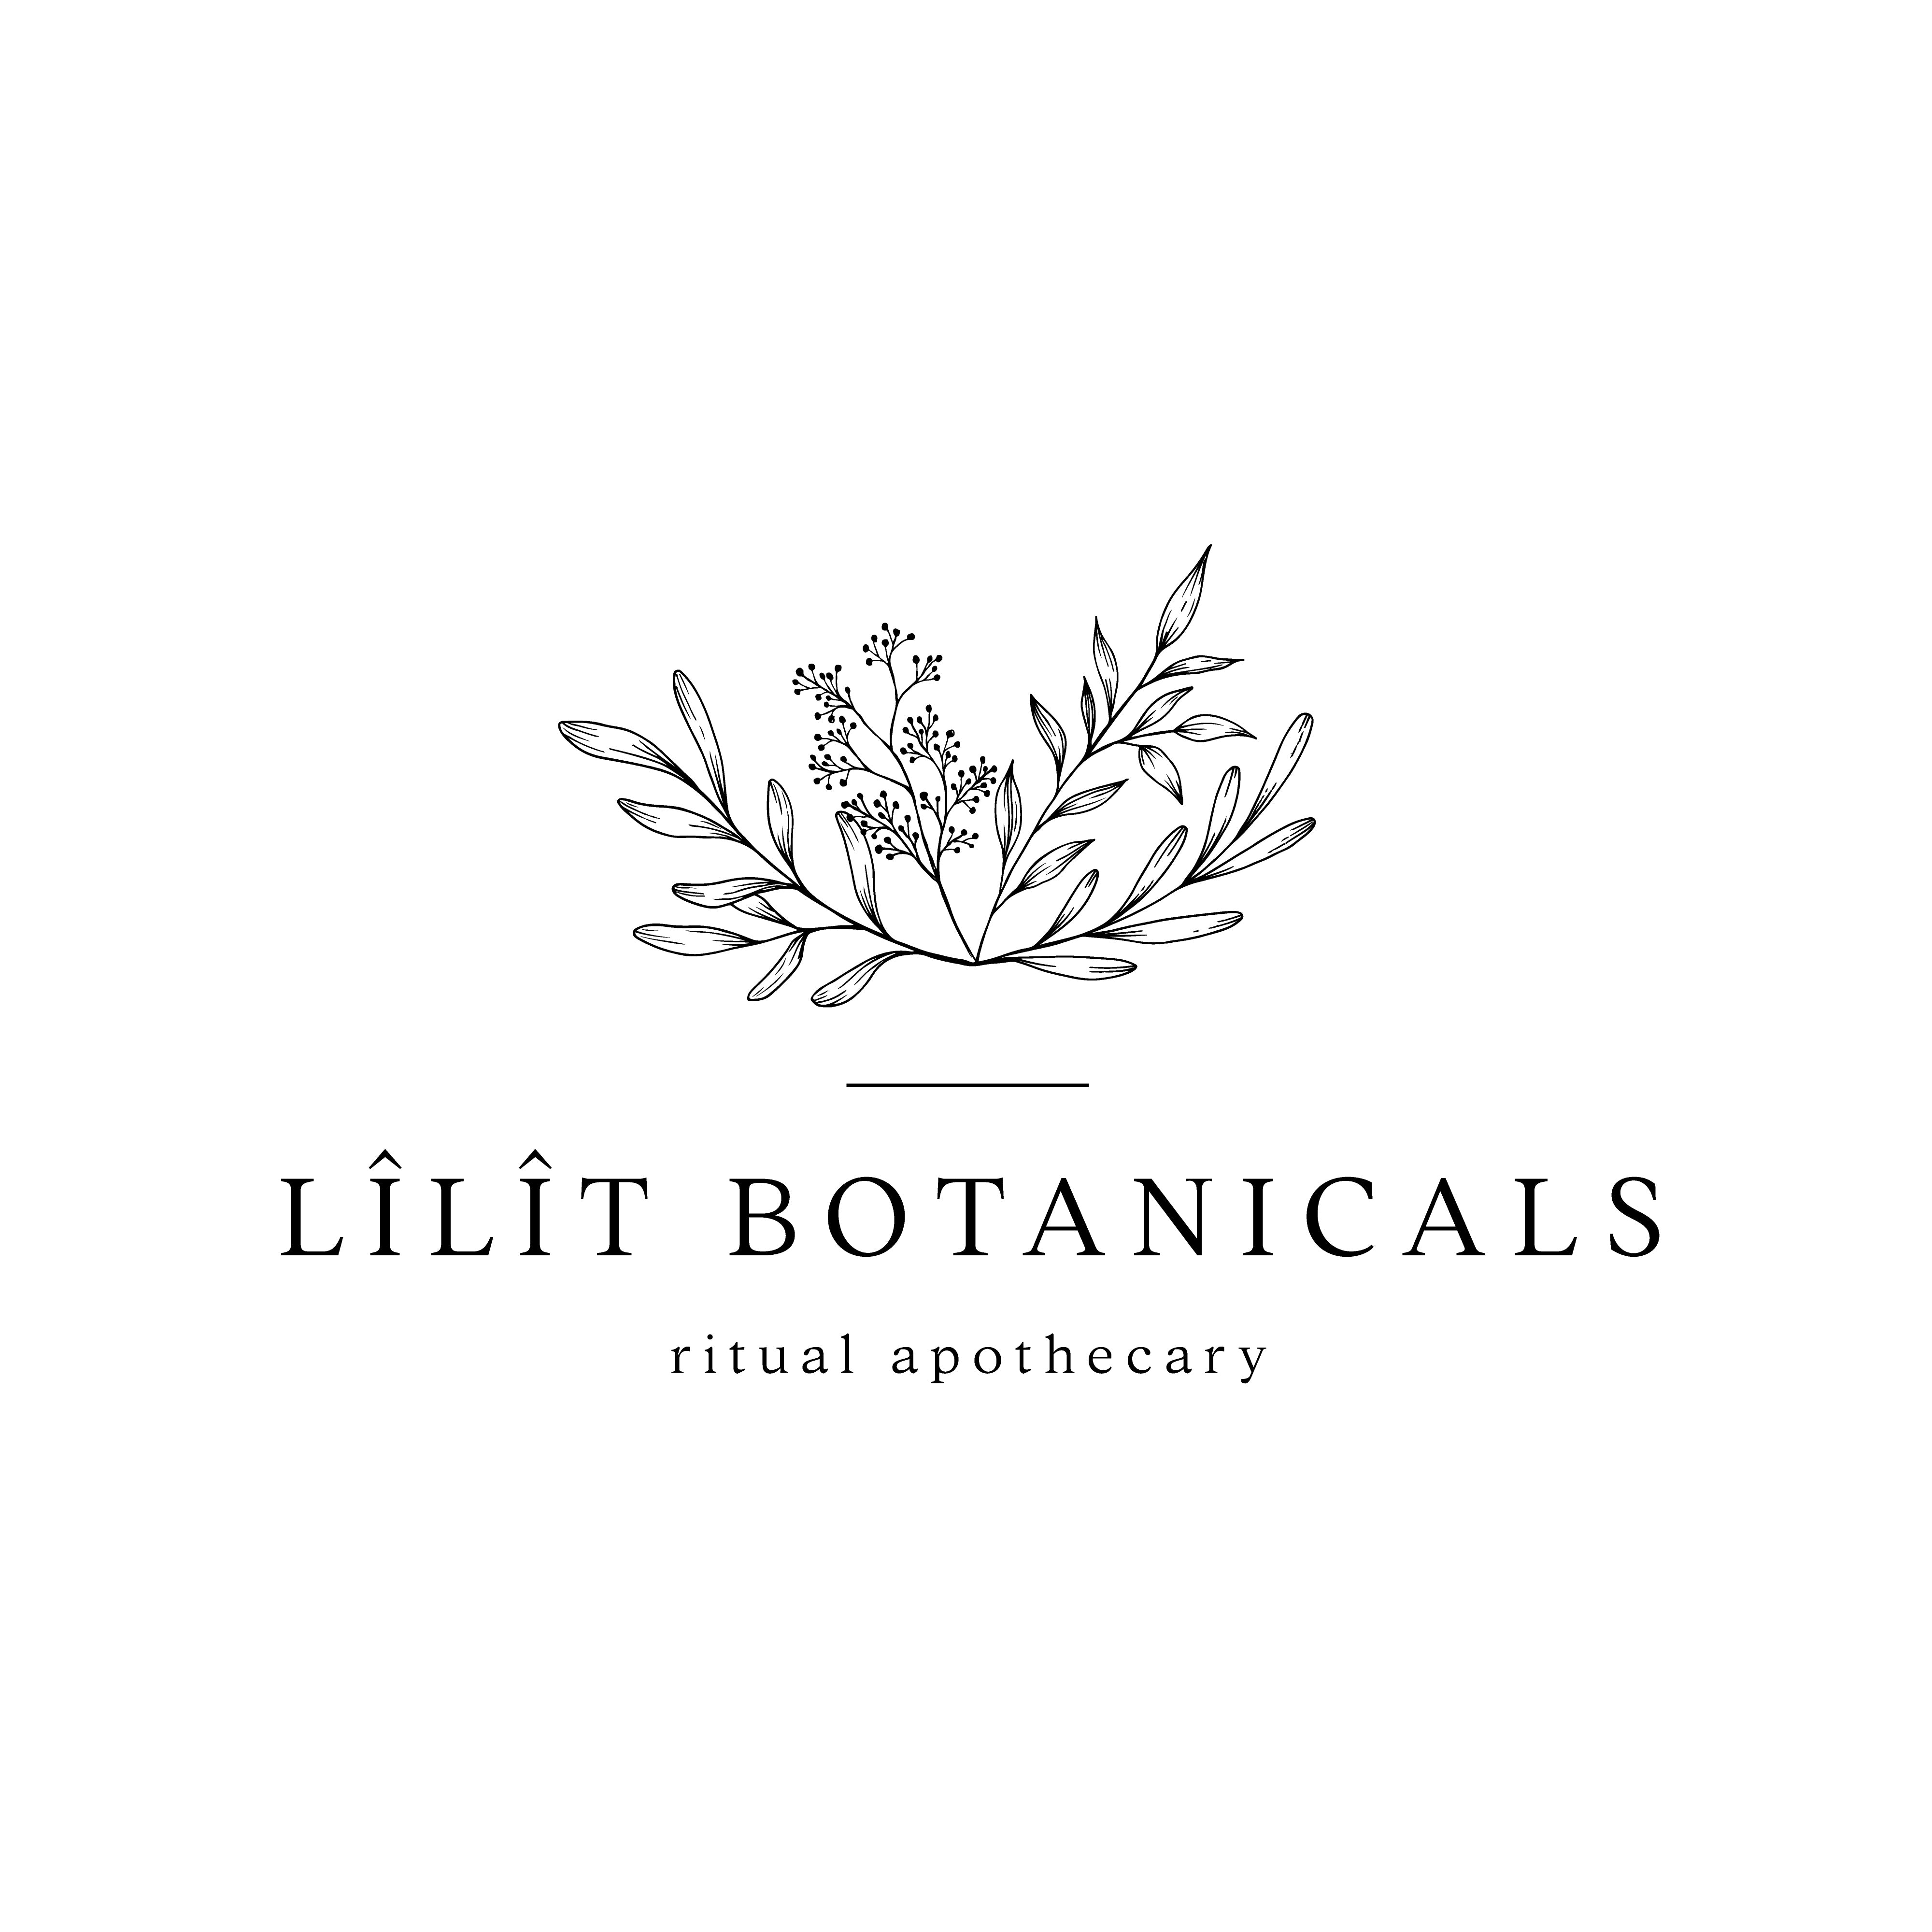 Lilit Botanicals - Ritual Apothecary